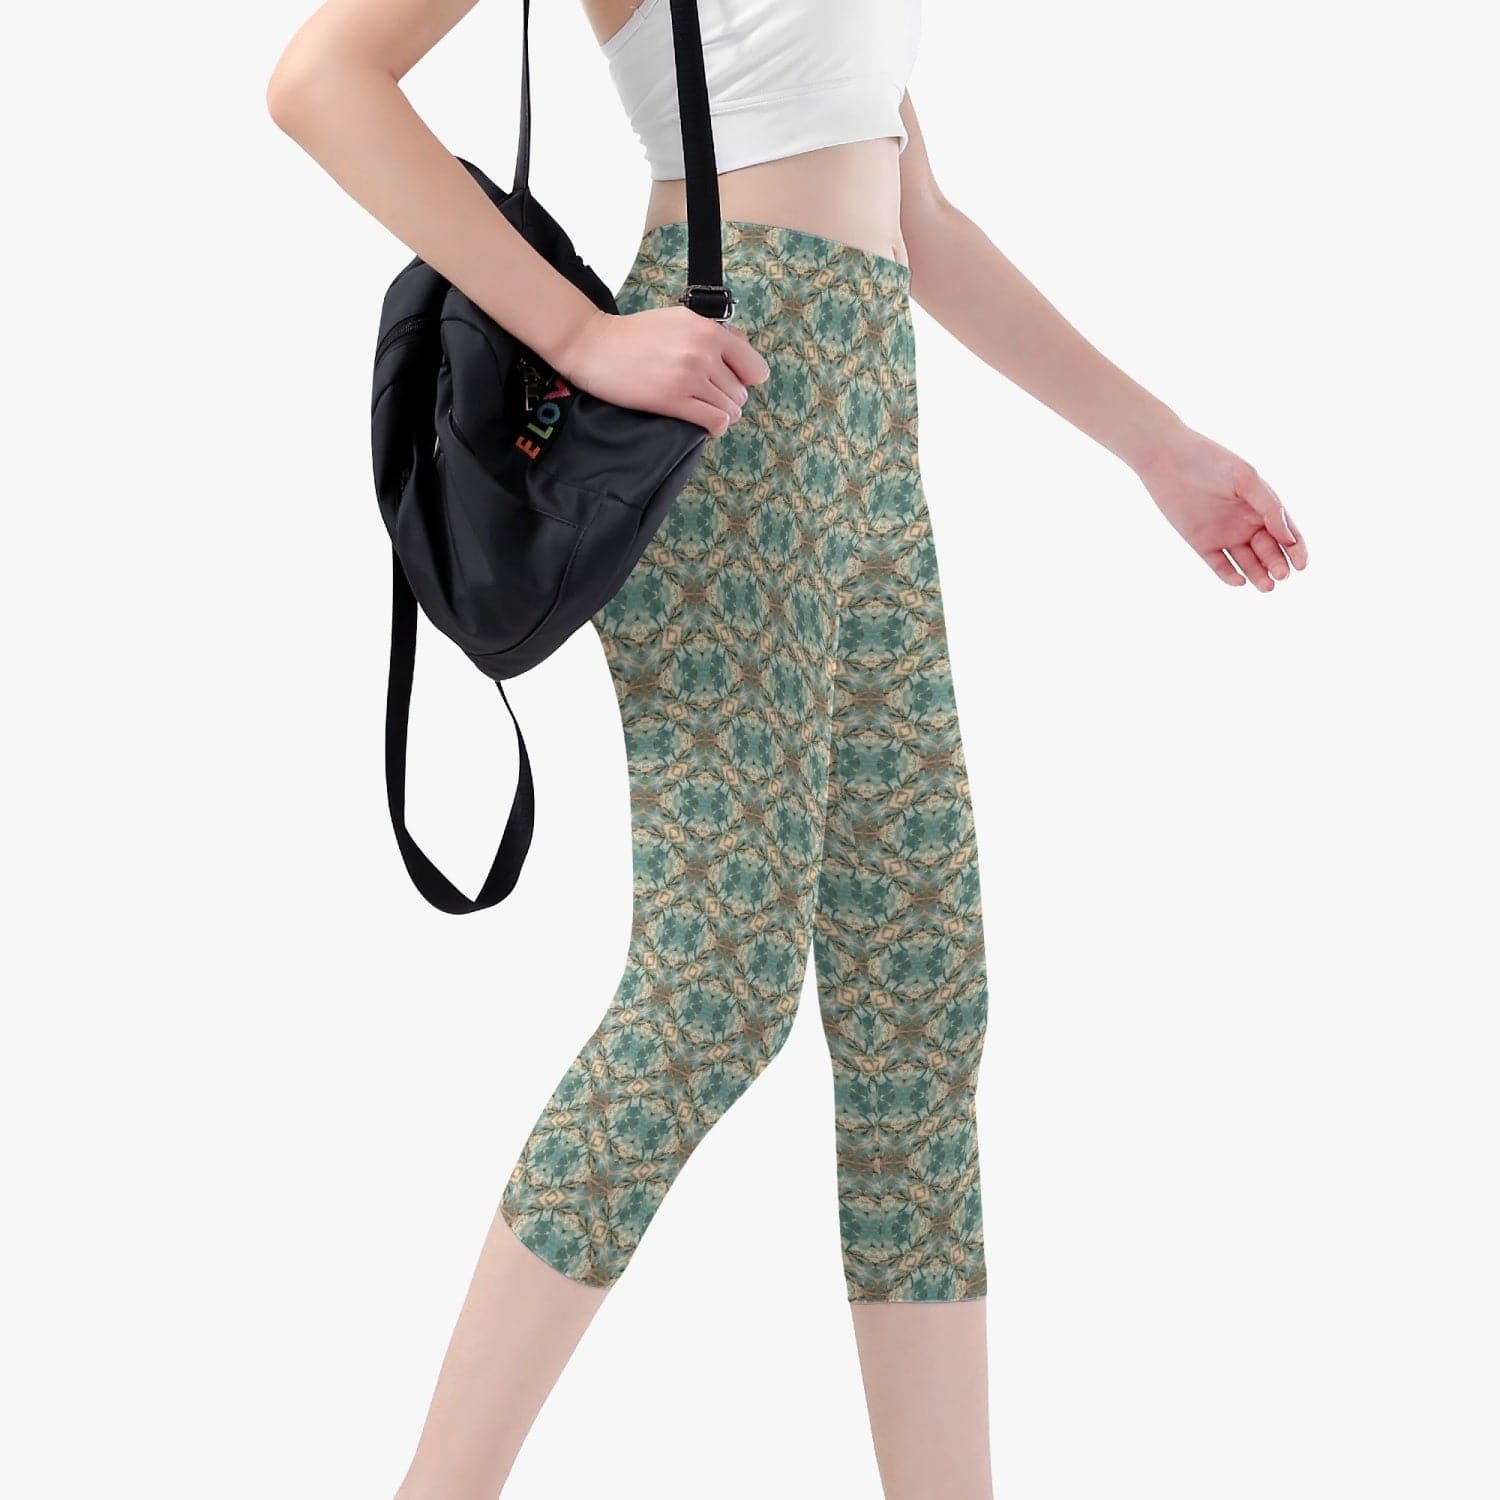 Sand and Aqua Blue patterned design, skinny fit 3/4 Yoga Pants/Leggings, by Sensus Studio Design